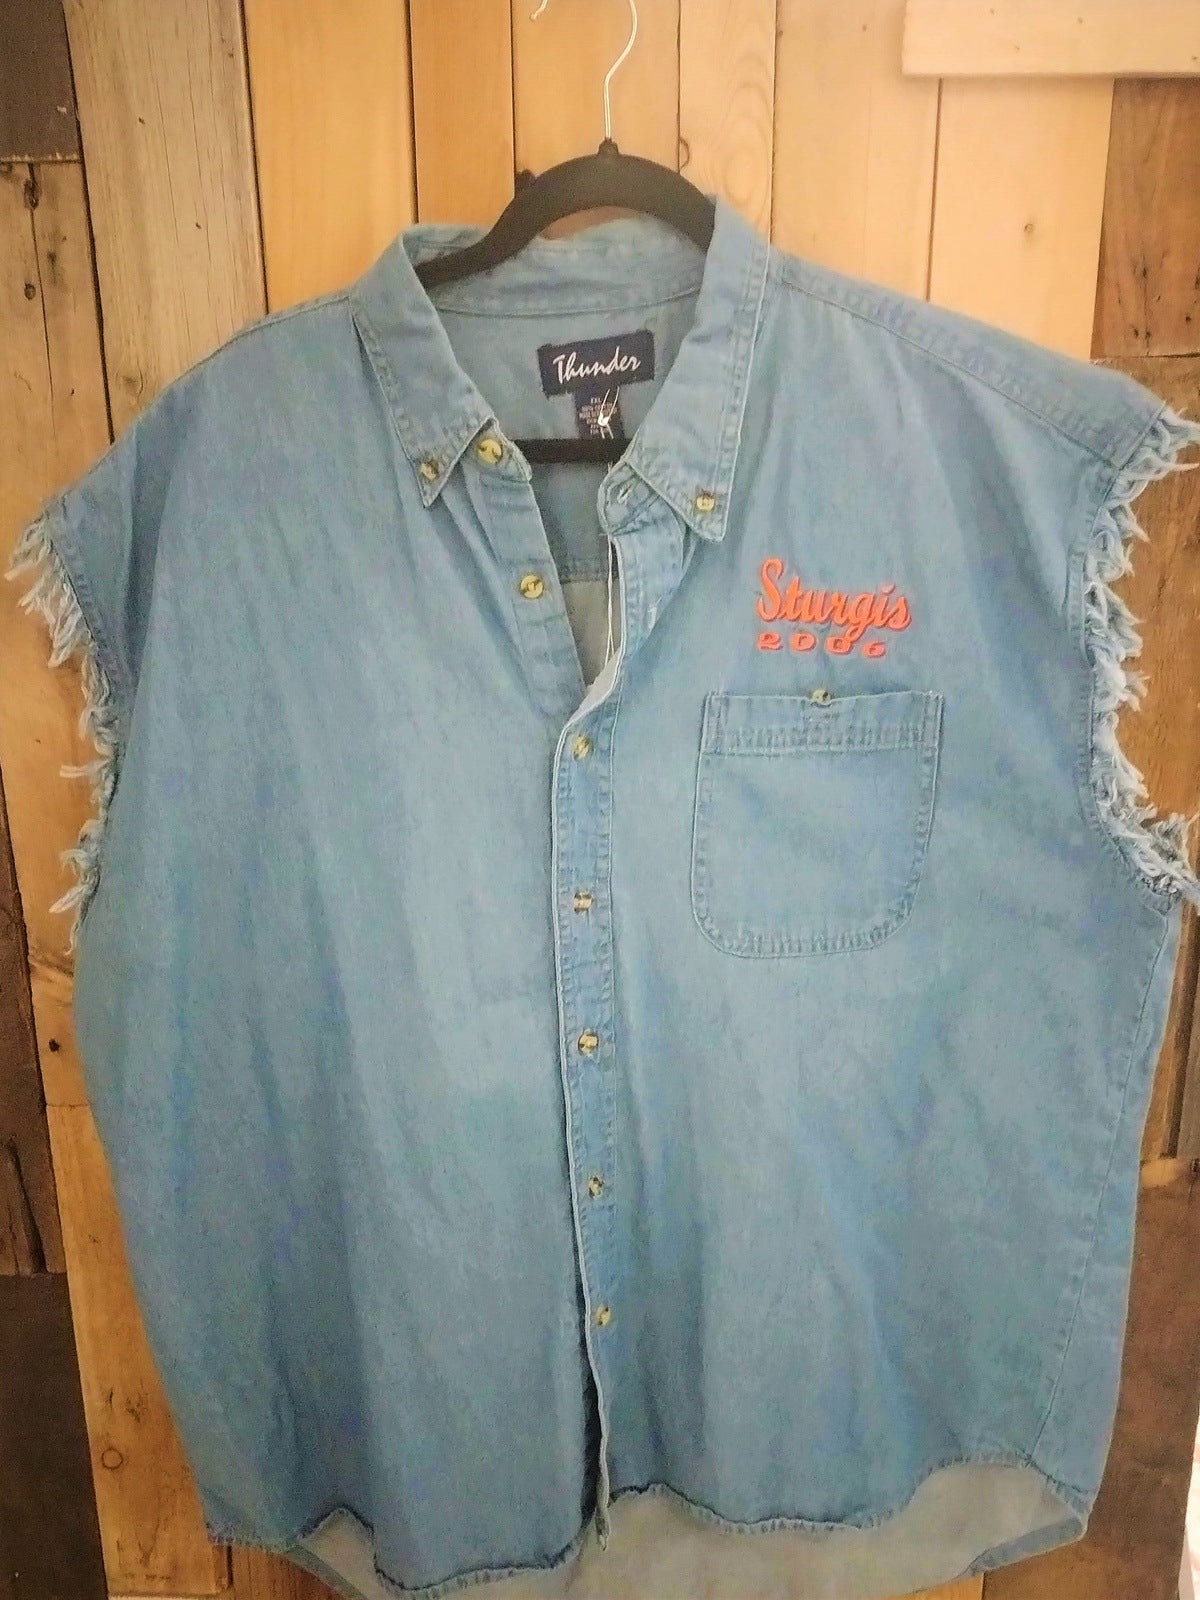 Sturgis 2006 Sleeveless Button Up Shirt Size XXL